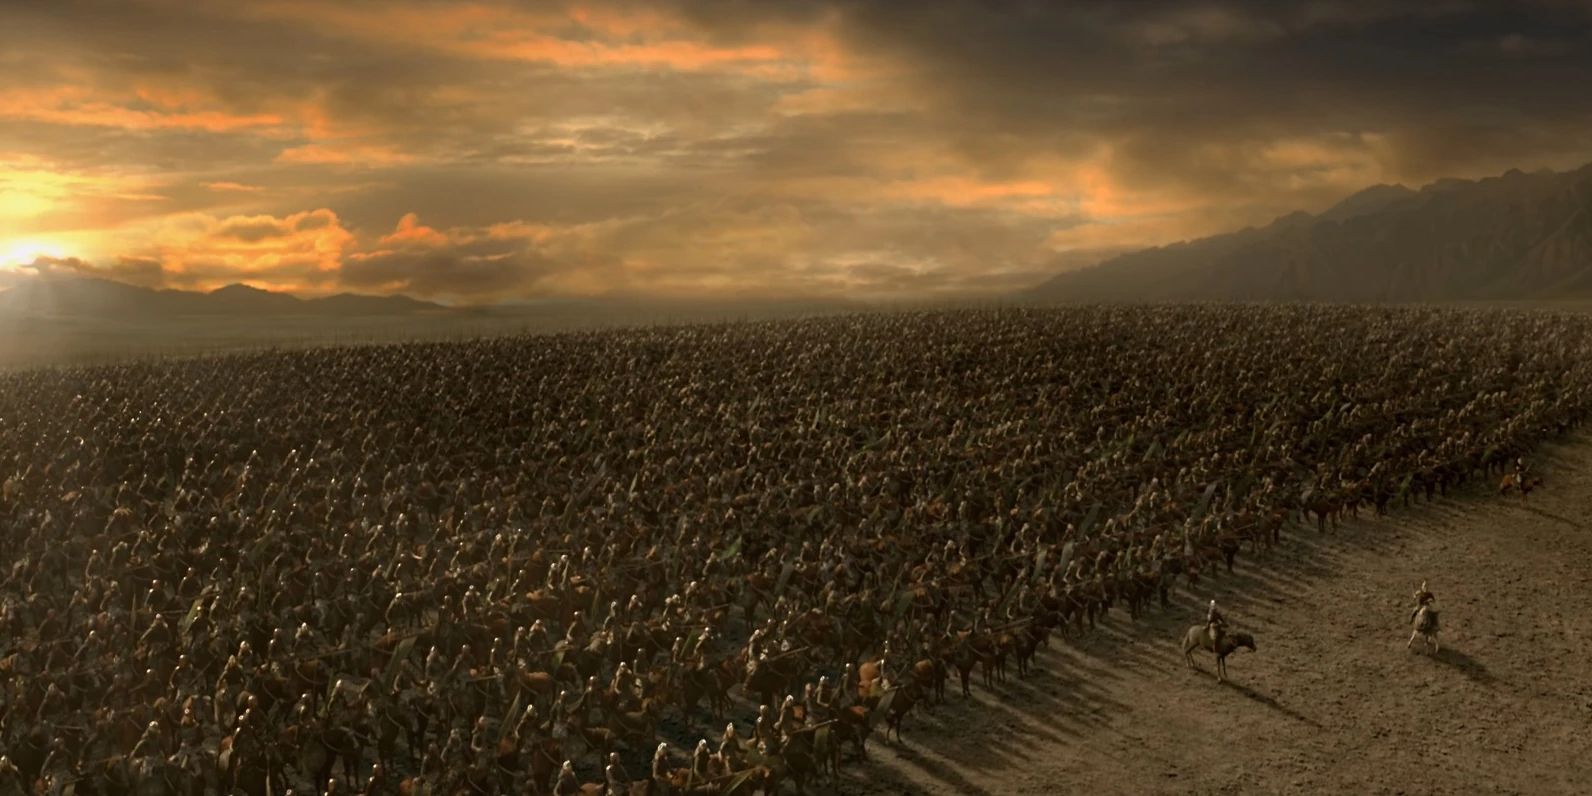 Rohirrim at the Battle of the Pelennor Fields